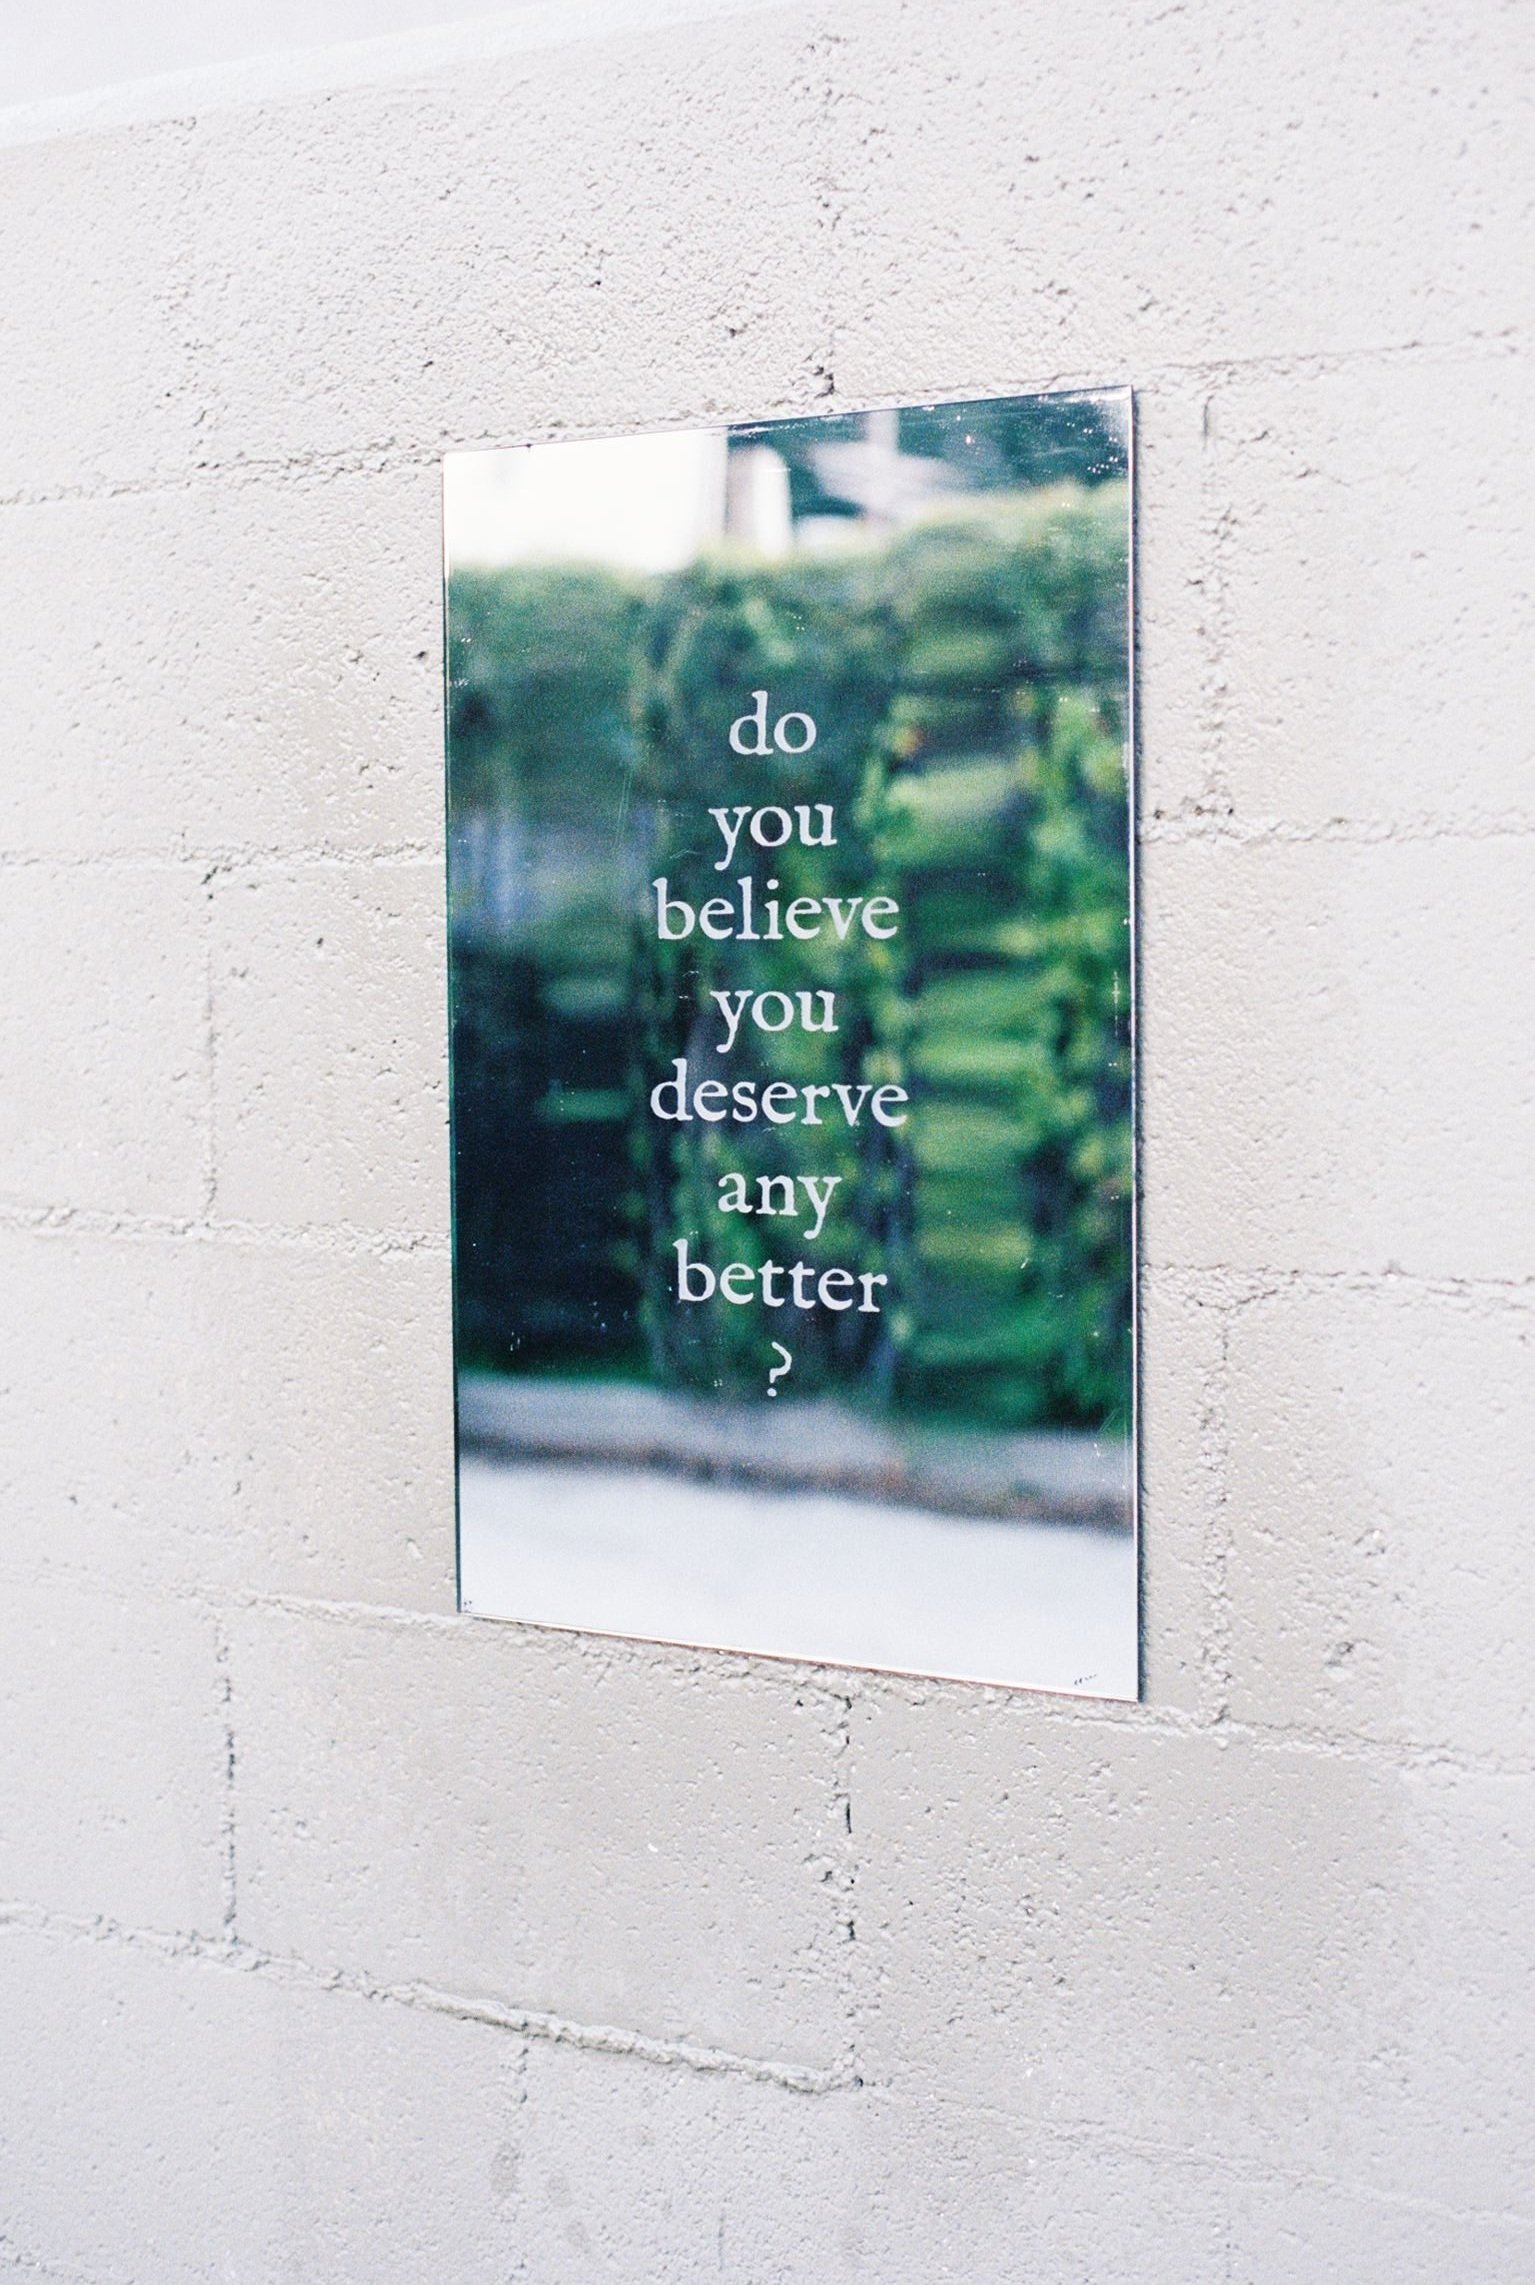 "do you believe you deserve any better?", (Tracy Terr, Los Feliz)